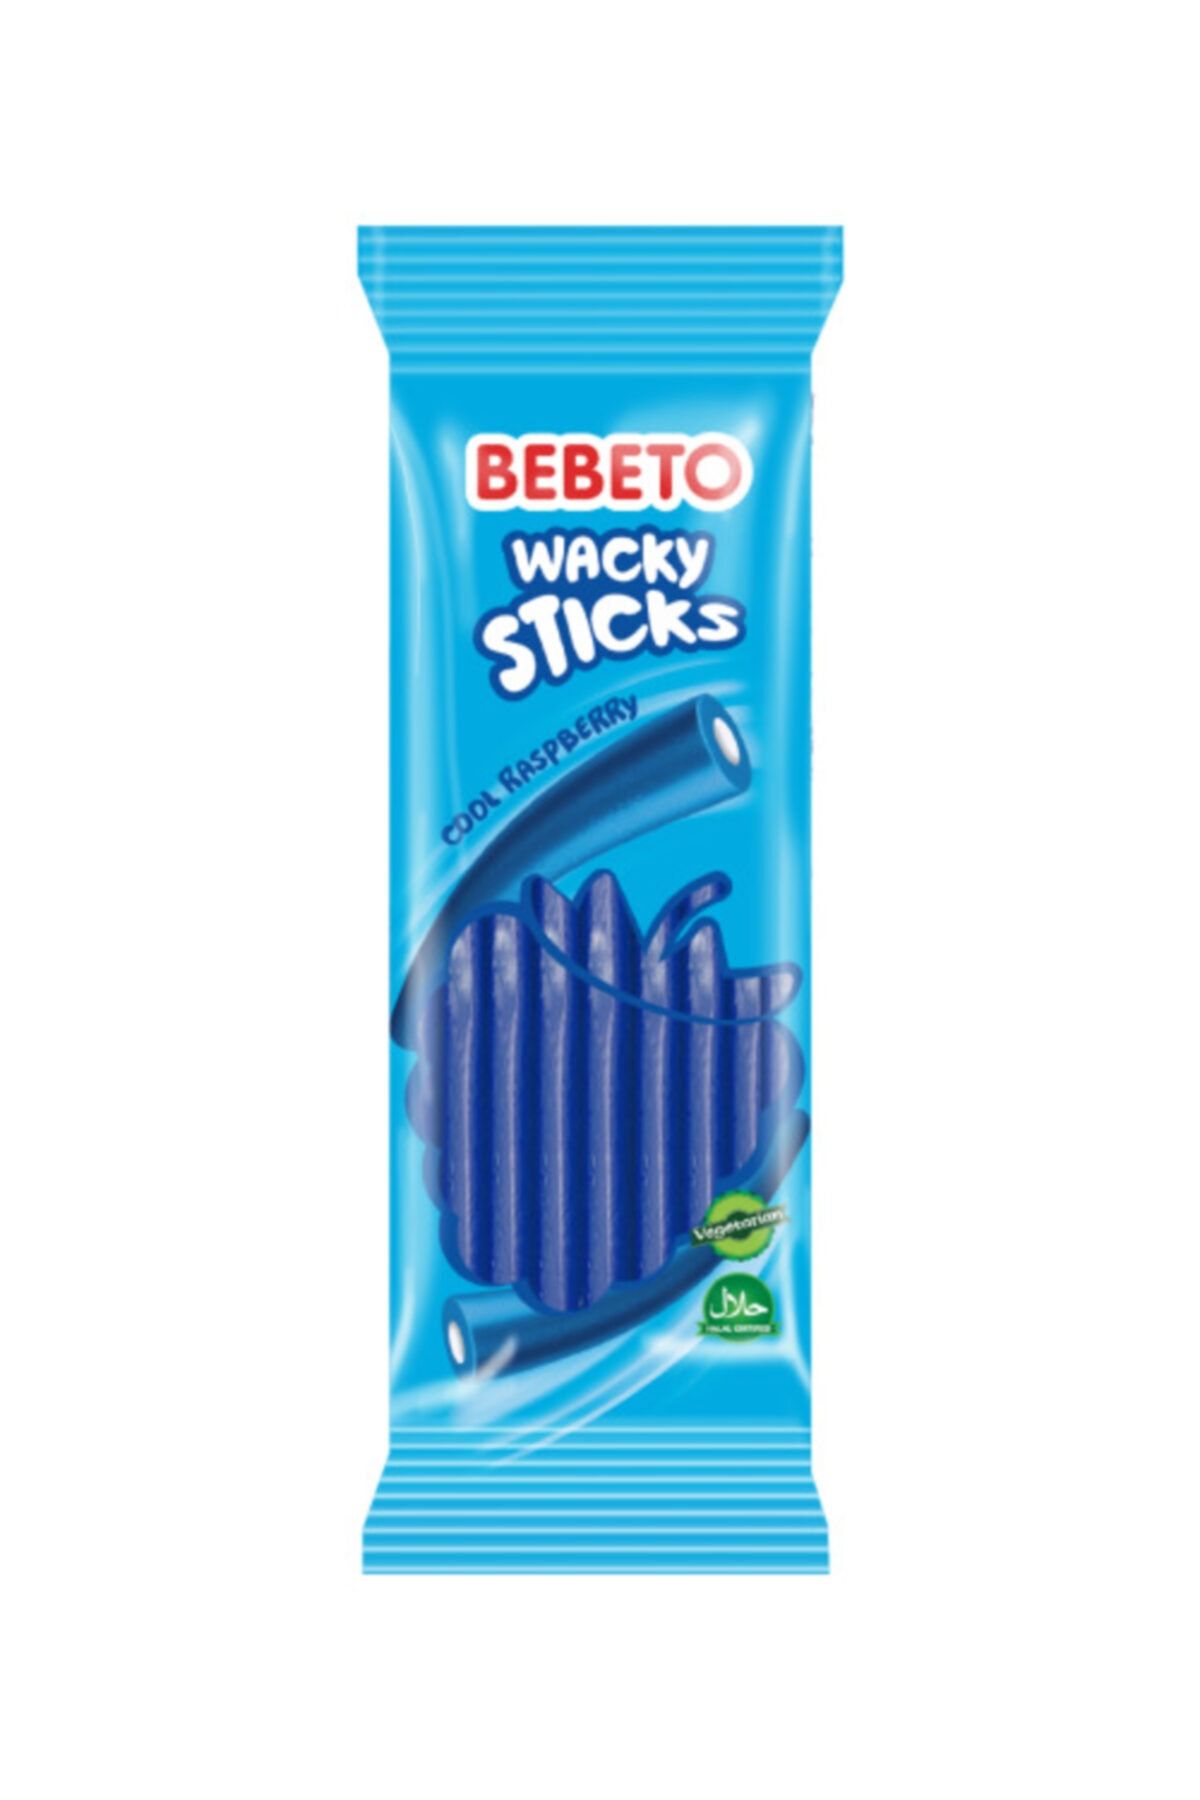 BEBETO Wacky Sticks Raspberry